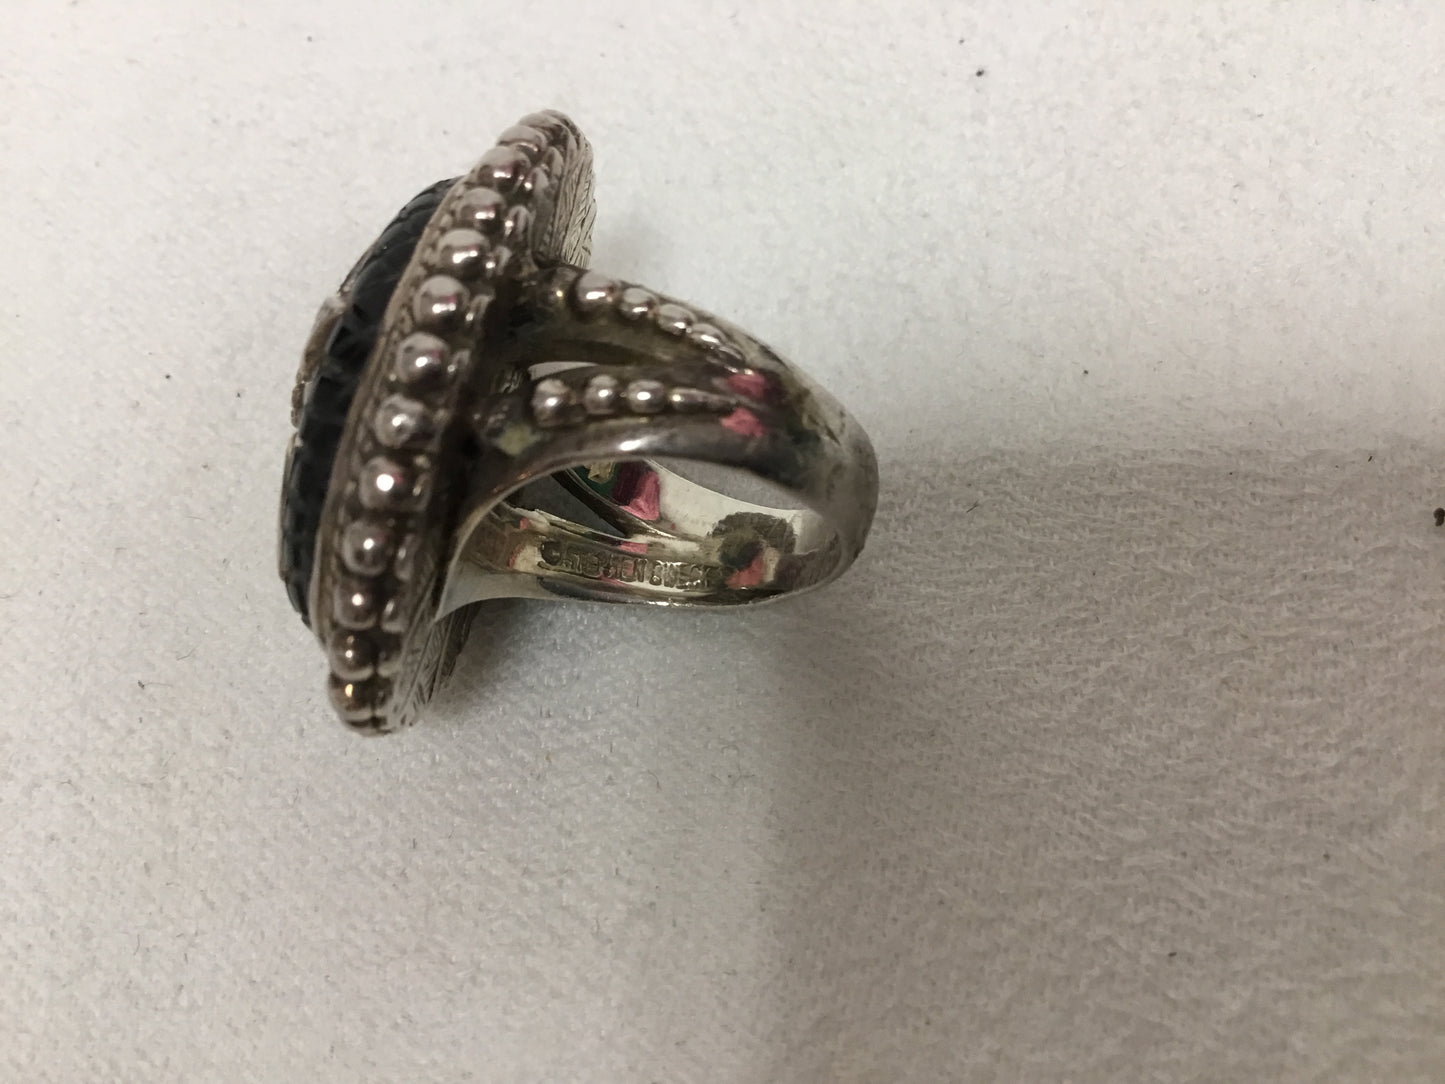 Stephen Dweck Silver Engraved Ring